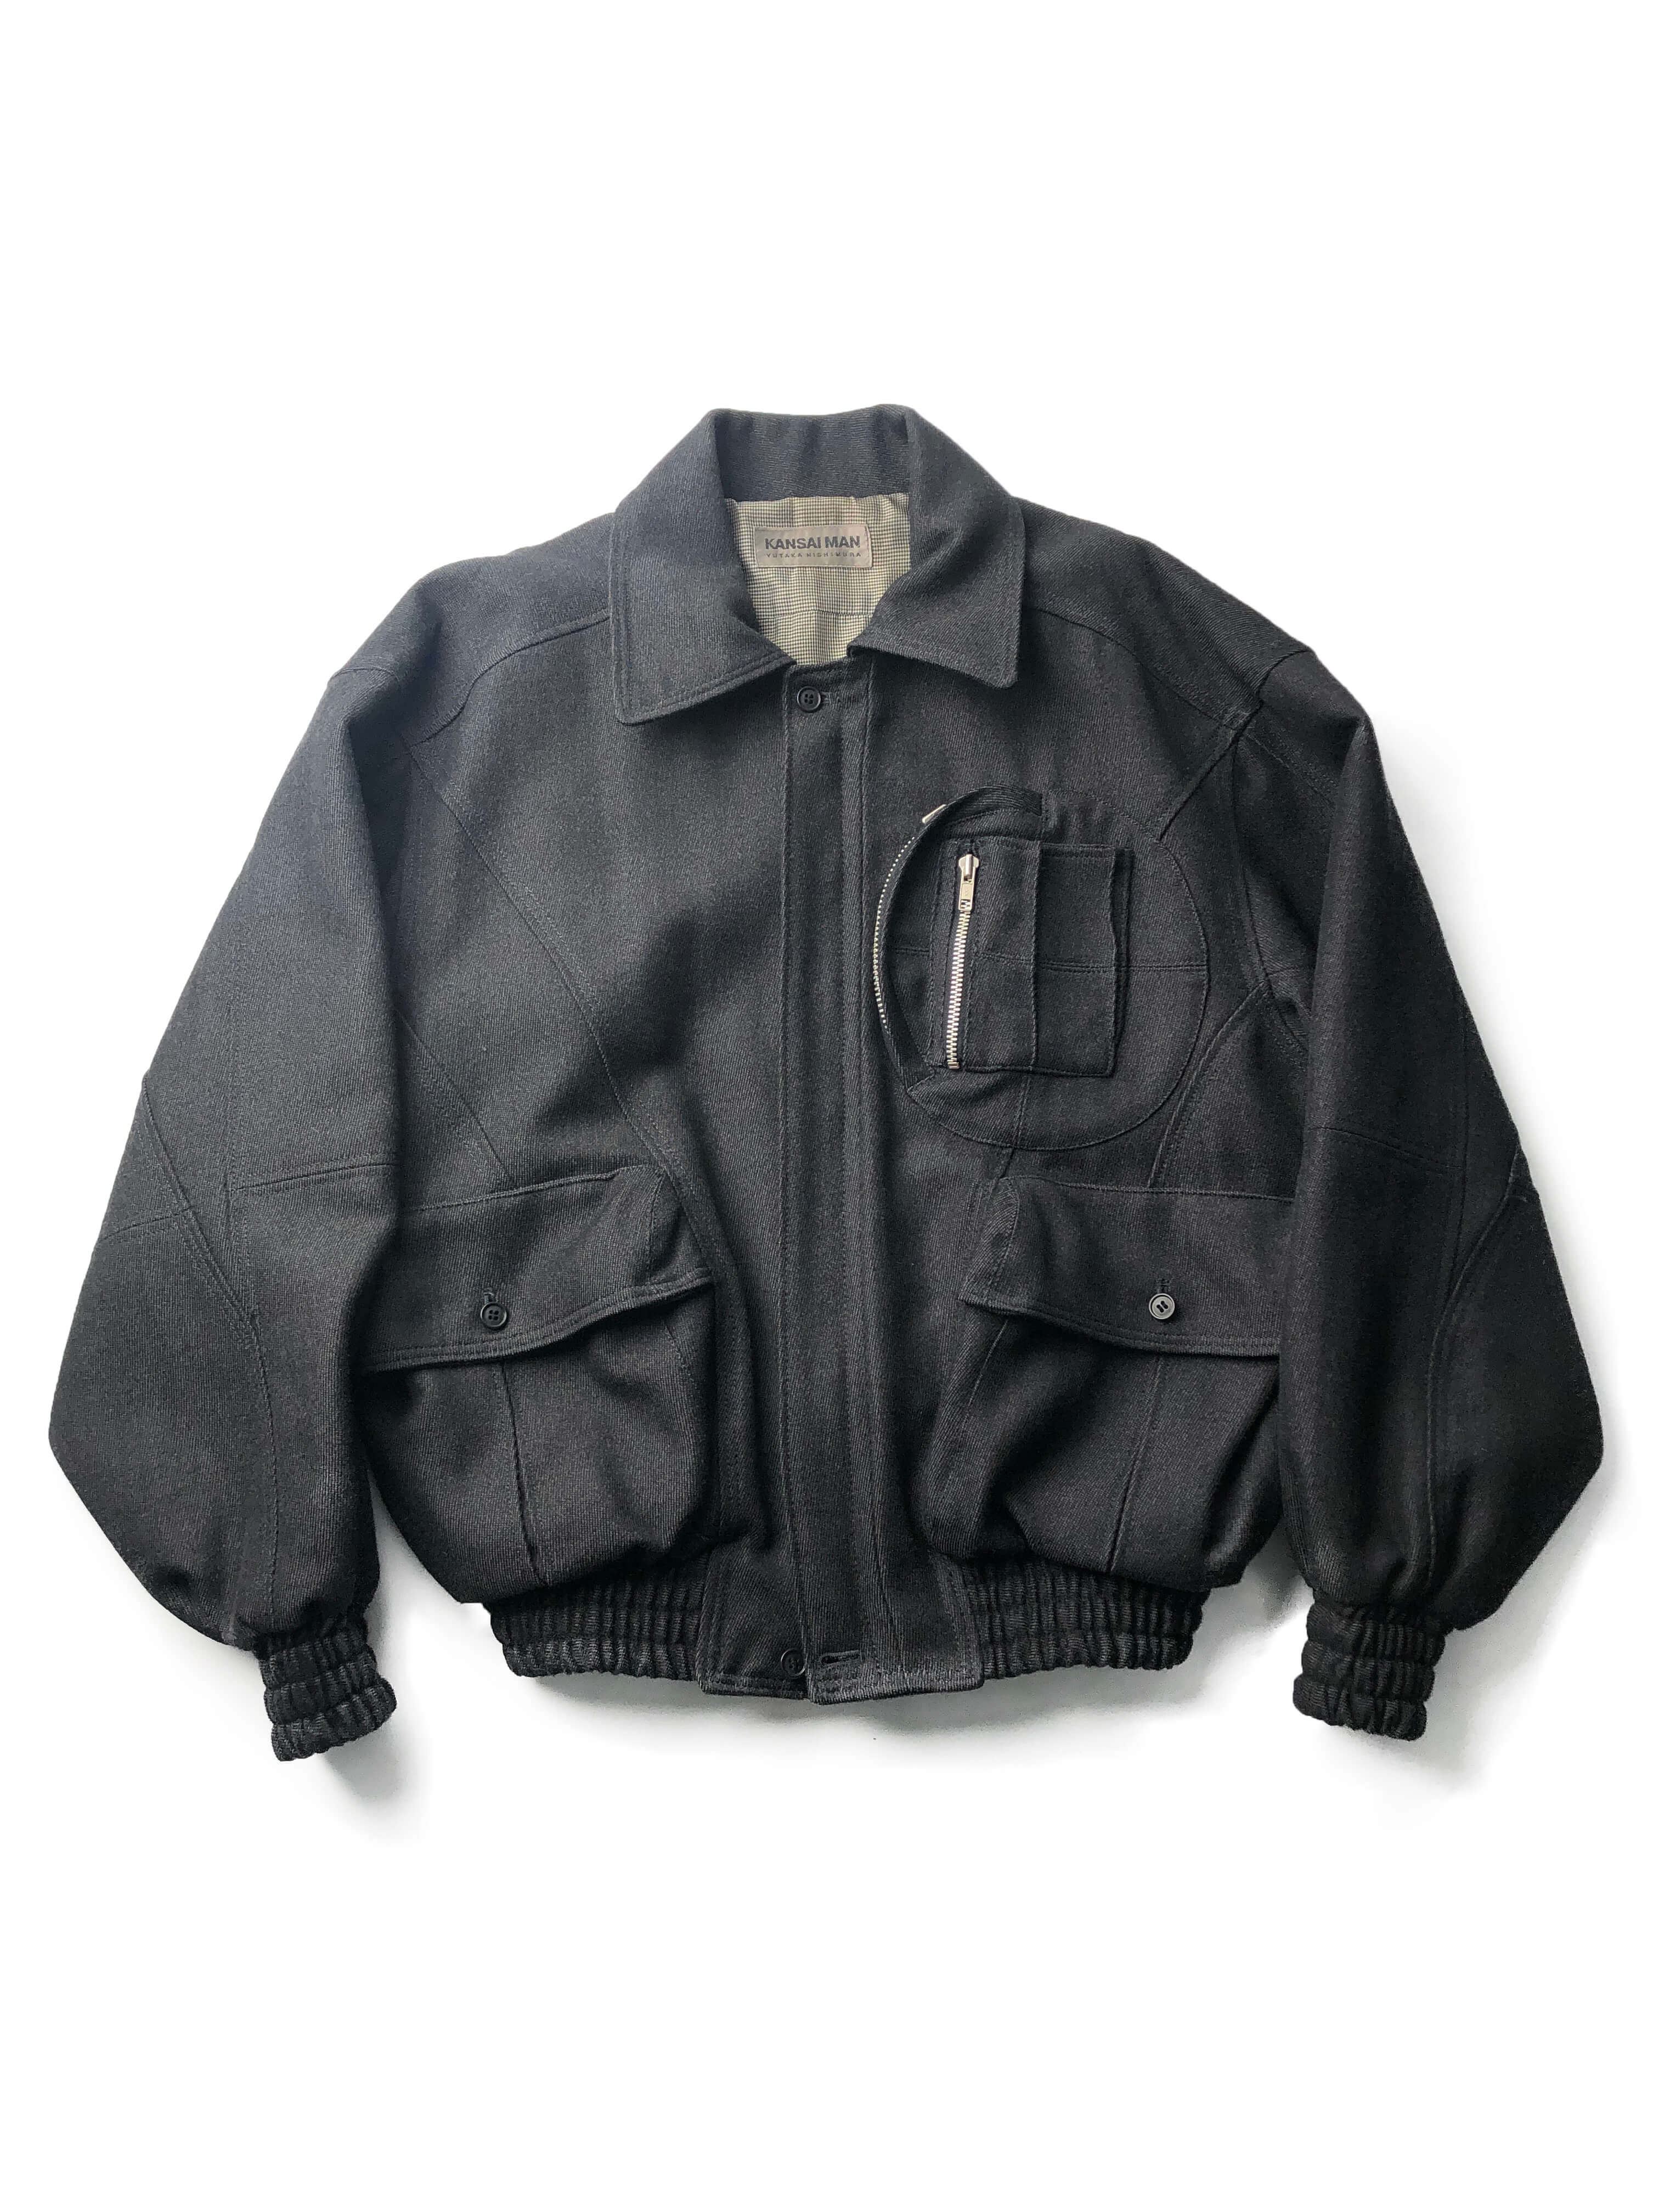 KANSAI MAN YUTAKA NISHIMURA bomber jacket